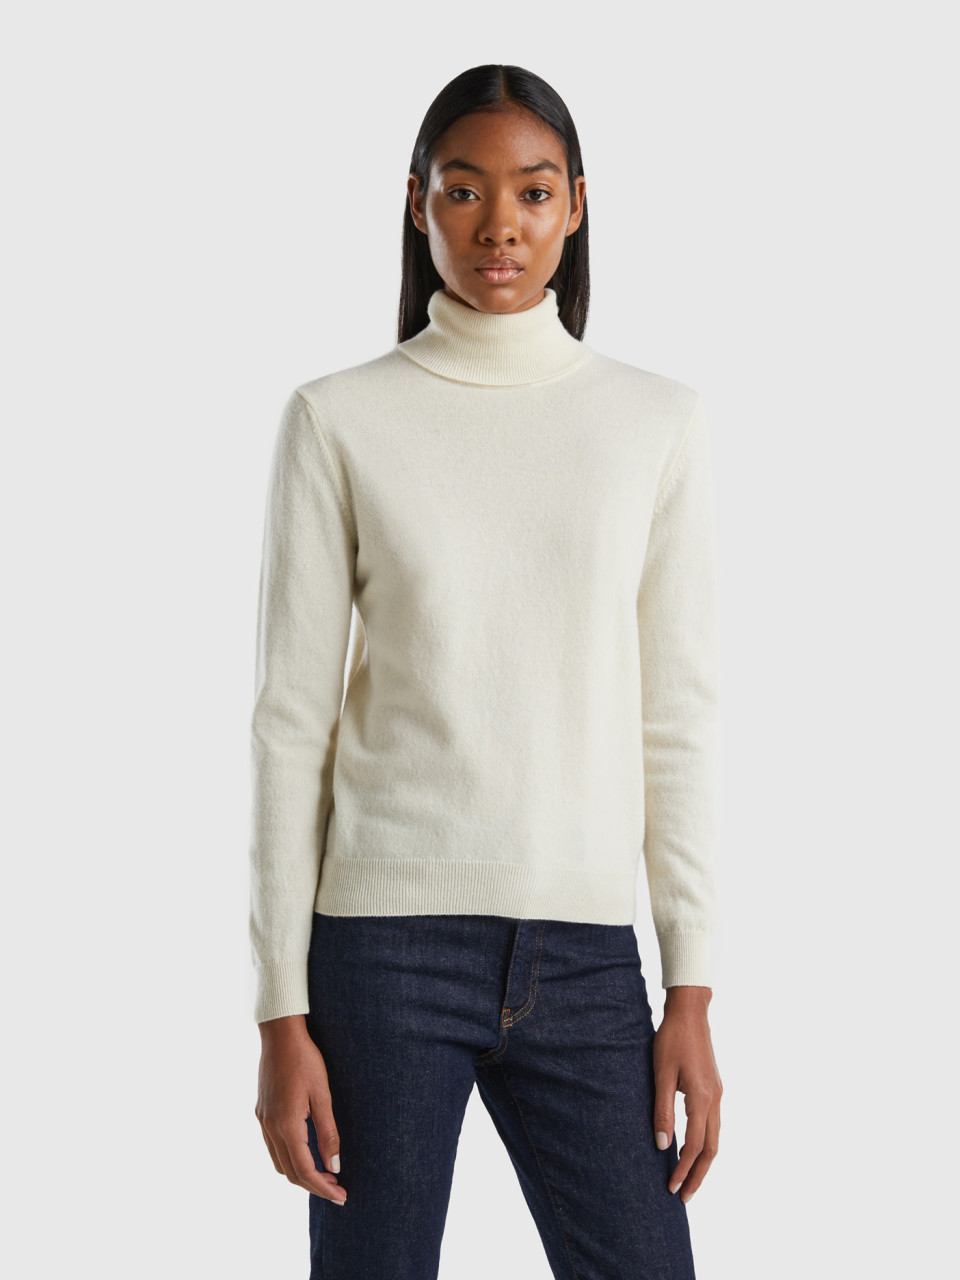 Benetton, Cream Turtleneck Sweater In Pure Merino Wool, Creamy White, Women